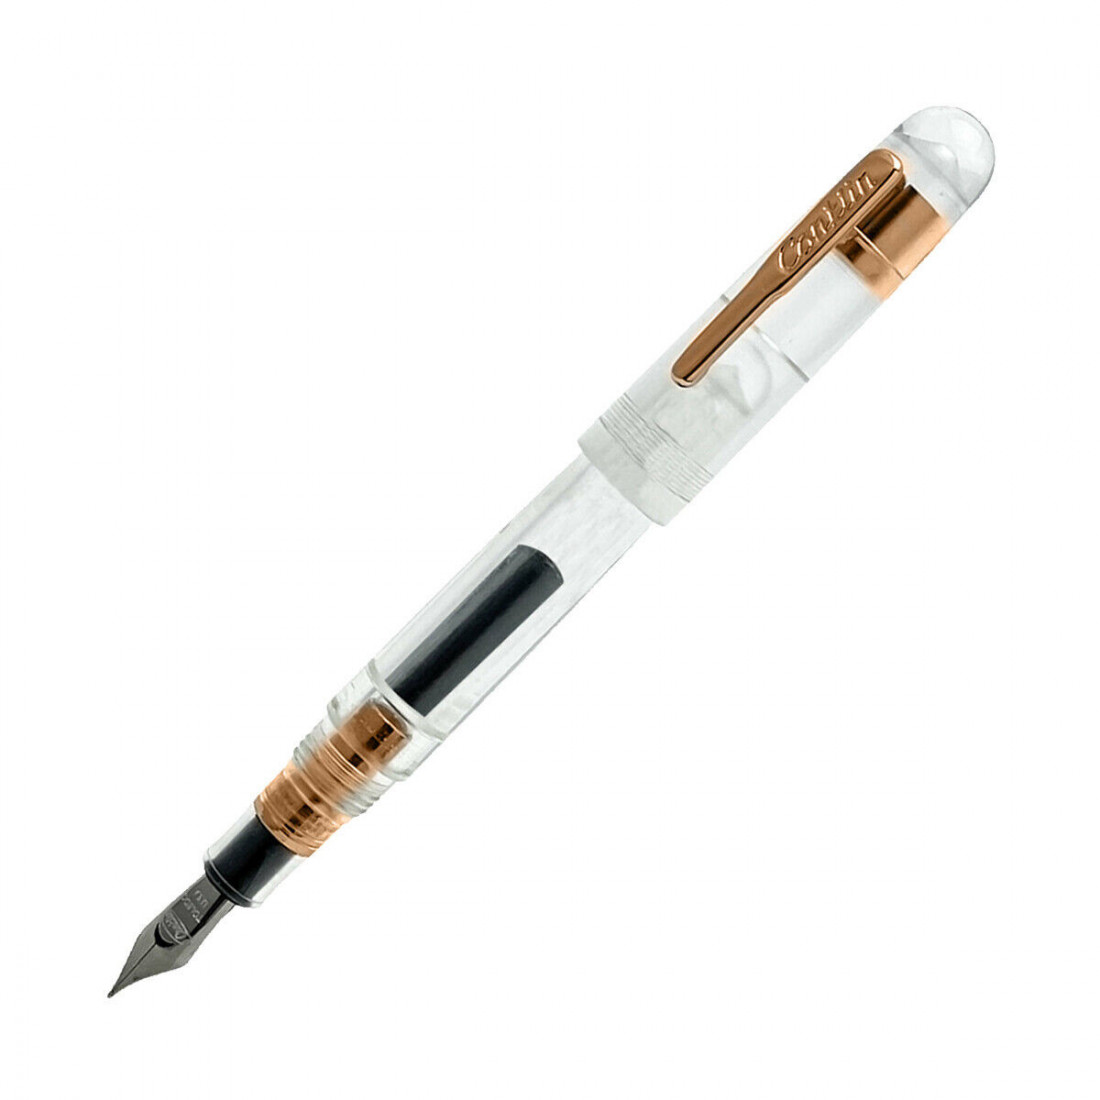 Conklin All American Demo(eyedropper)Rosegold Limited Edition Fountain Pen(cartridge/converter/eyedropper filling system)